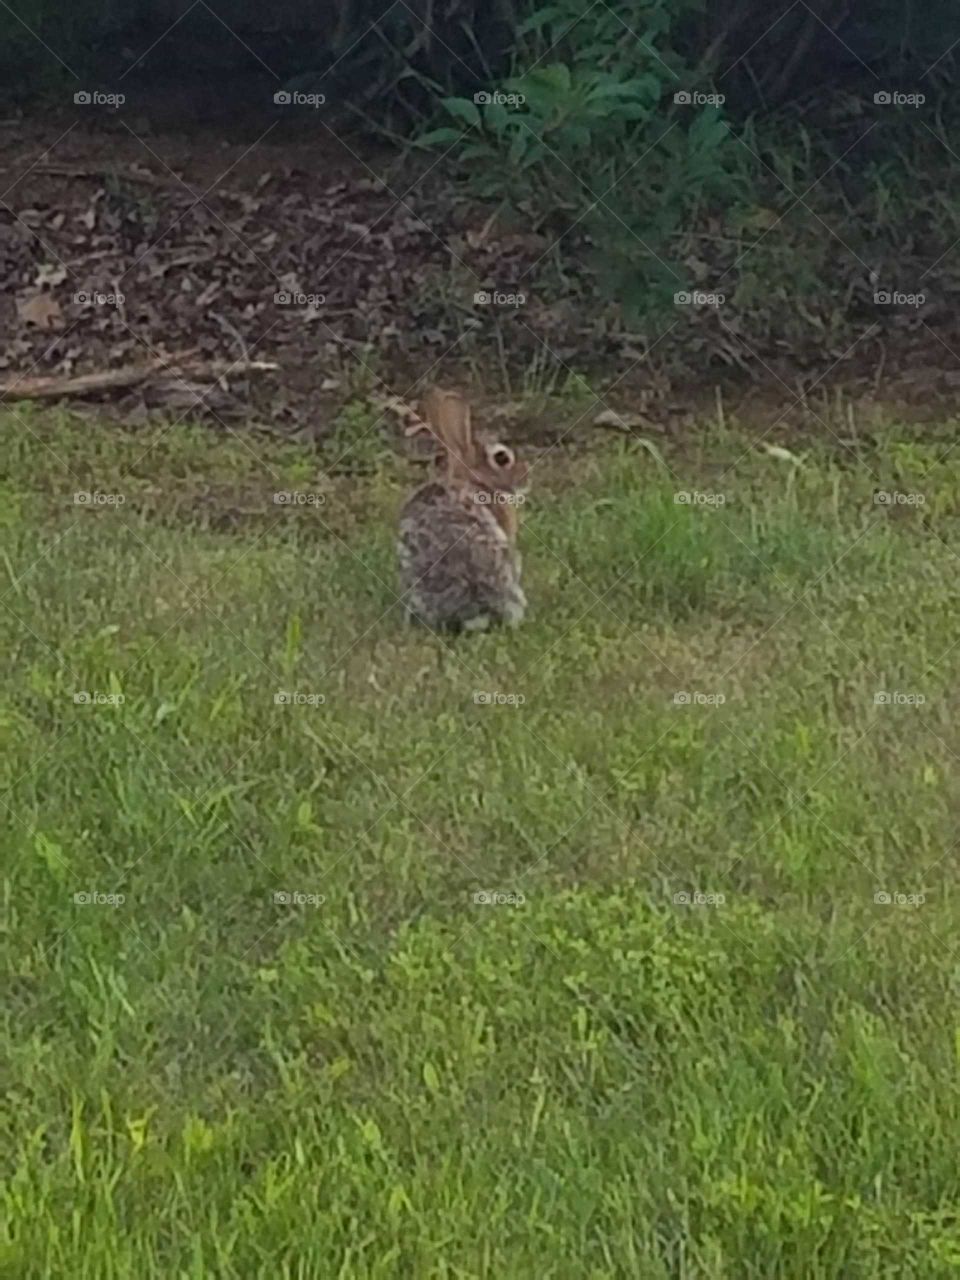 A pondering rabbit.